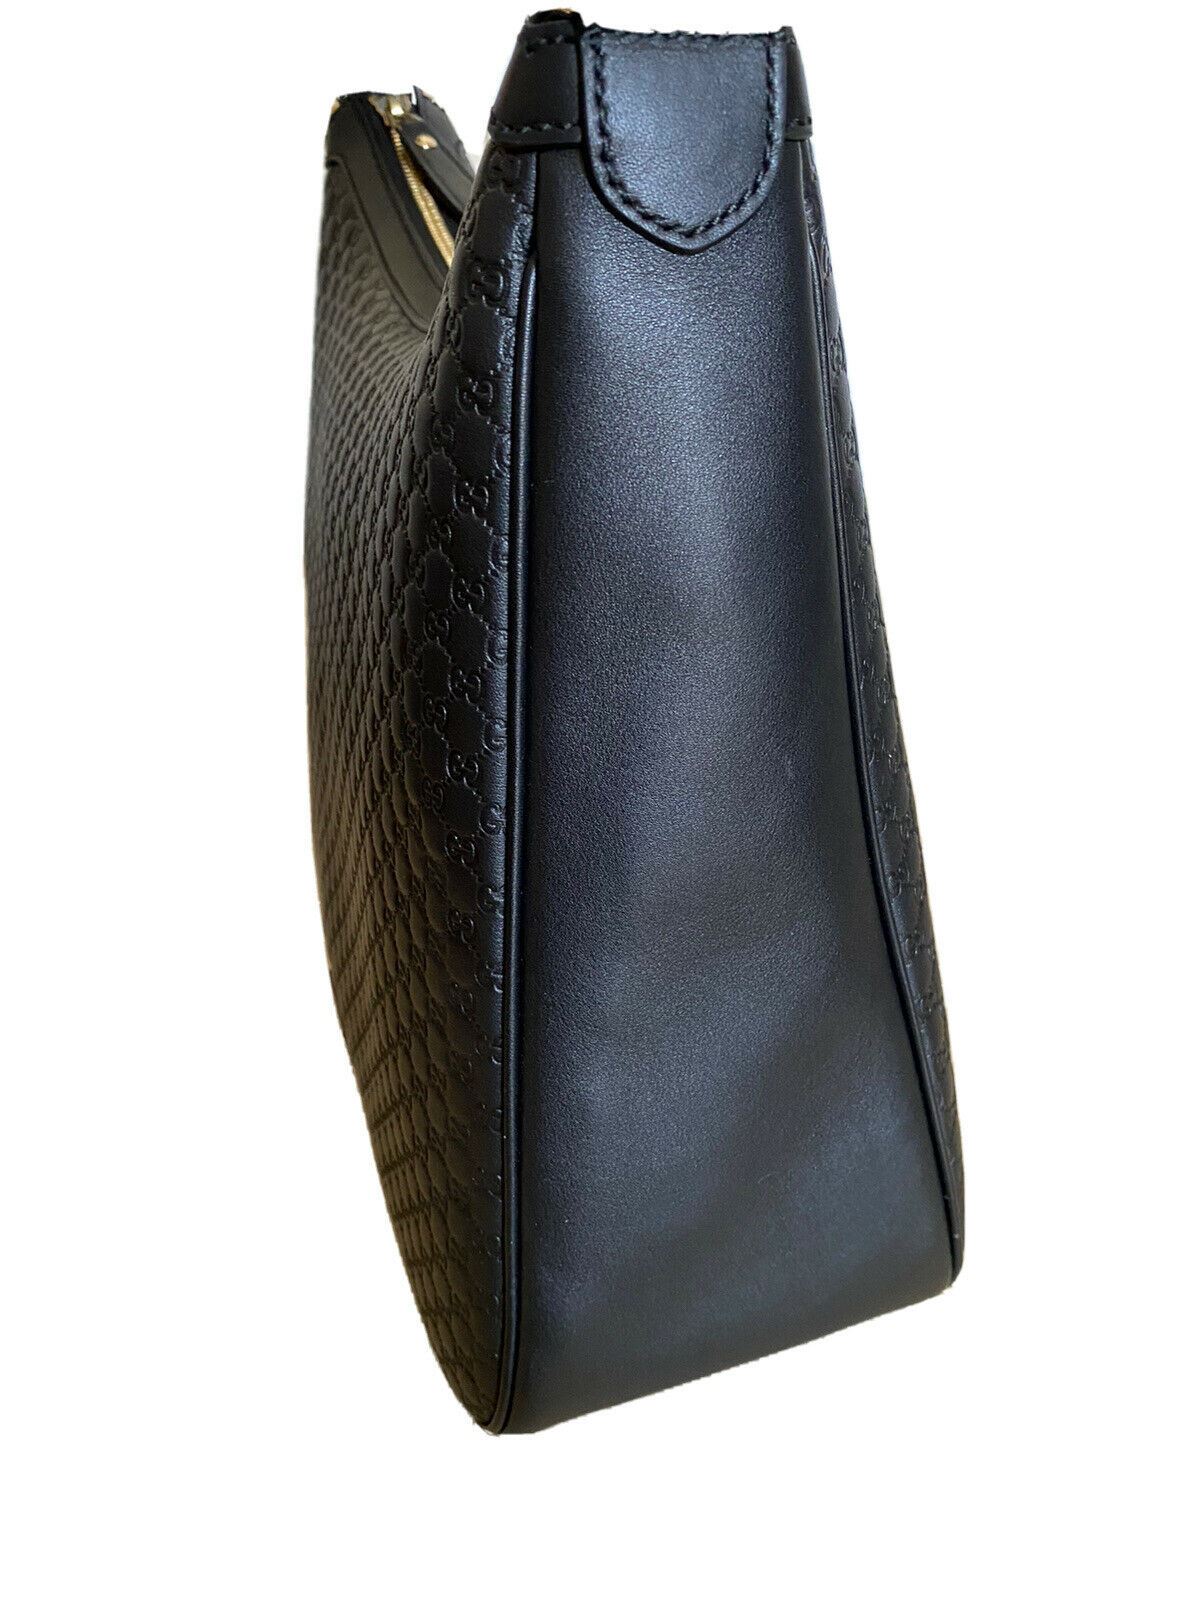 New Gucci Medium 510292. 486628 GG Logo Leather Shoulder Bag Handbag Black